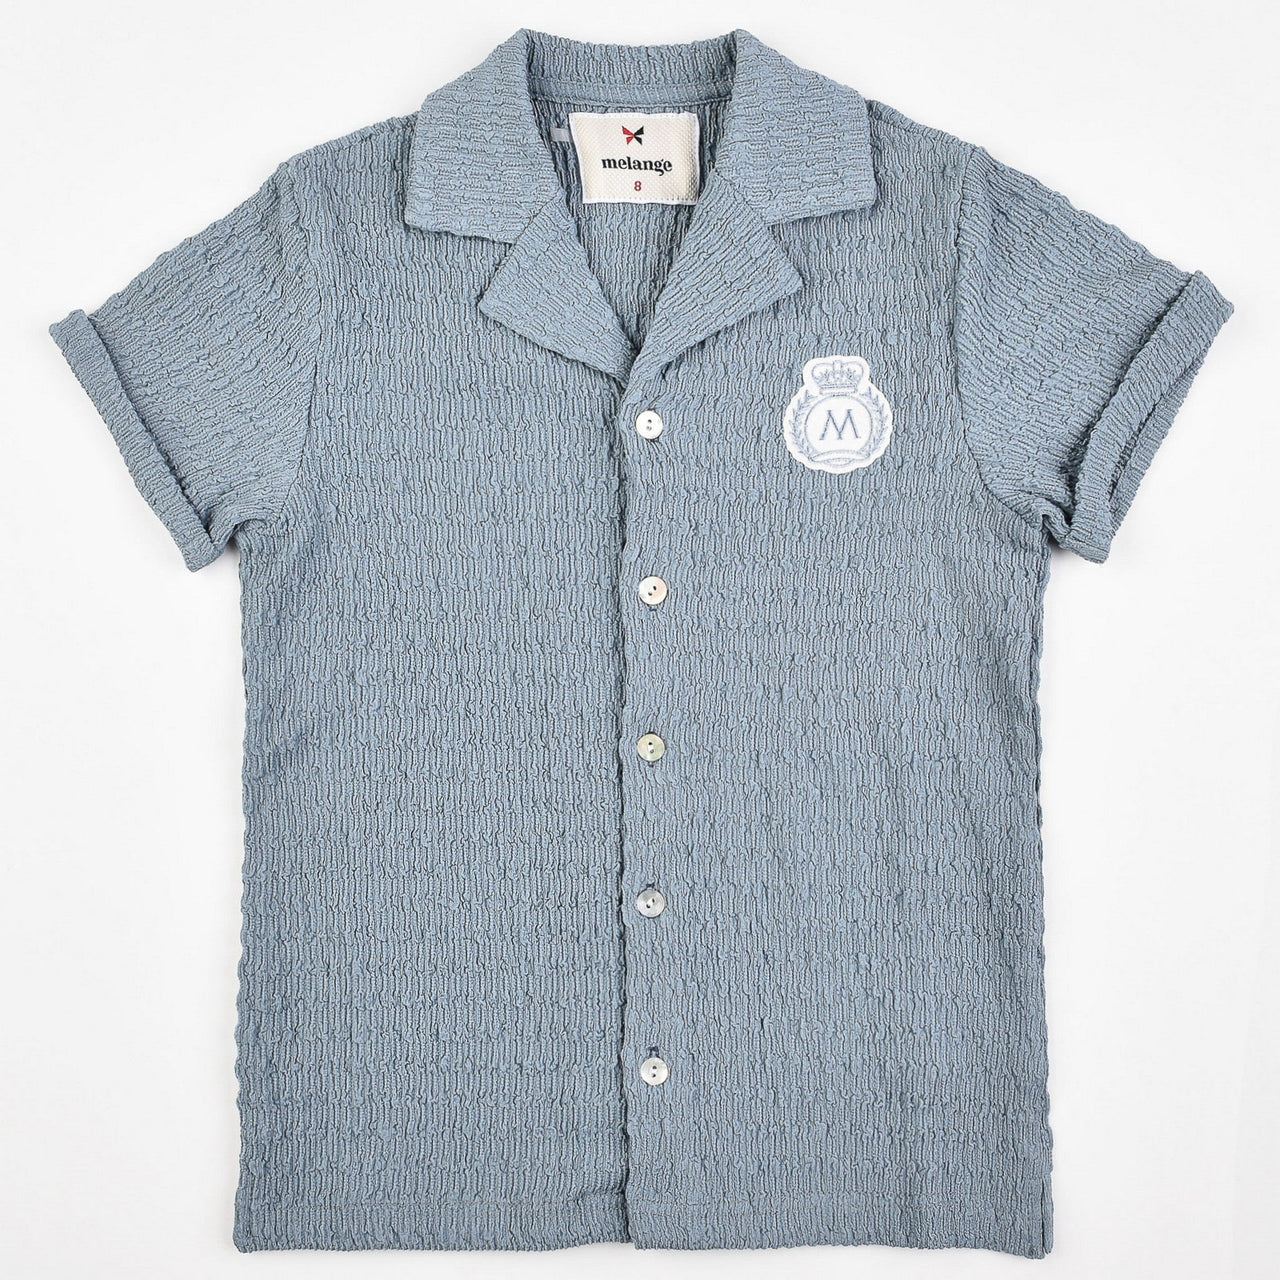 Melange Emblem Button Shirt - Kidichic